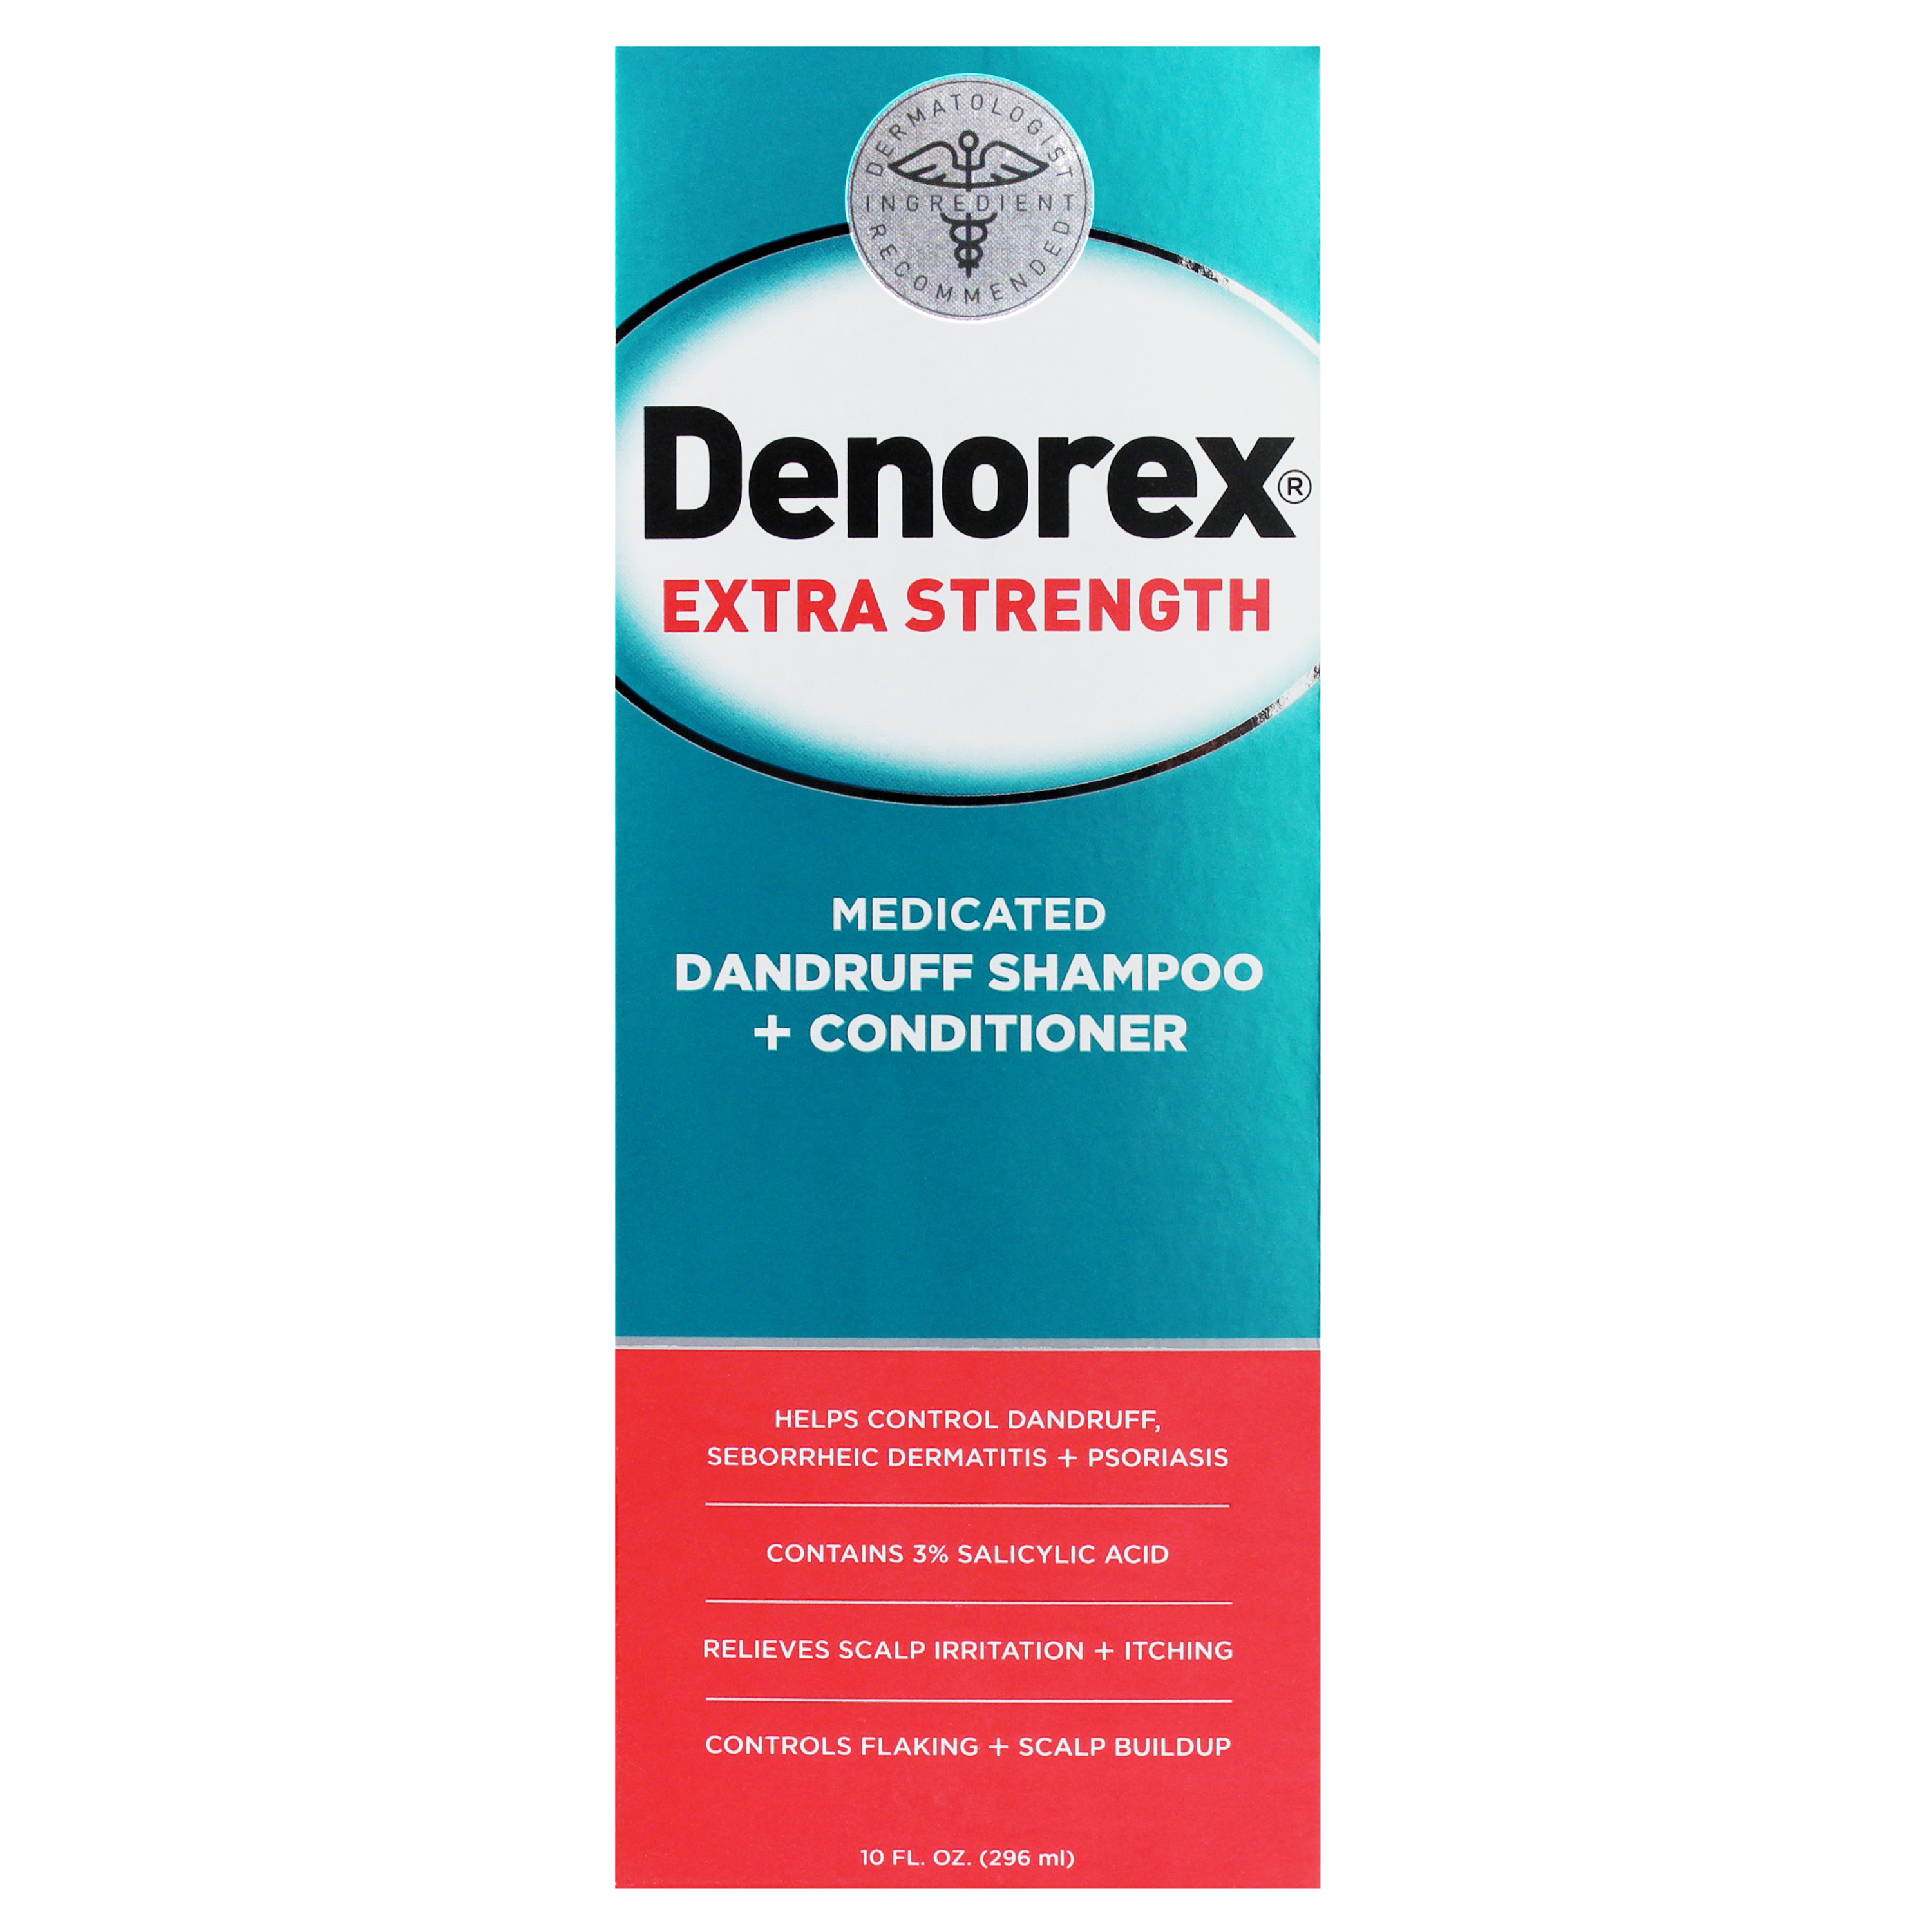 Denorex Extra Strength Medicated Dandruff Shampoo and Conditioner, 10 fl oz - image 4 of 9